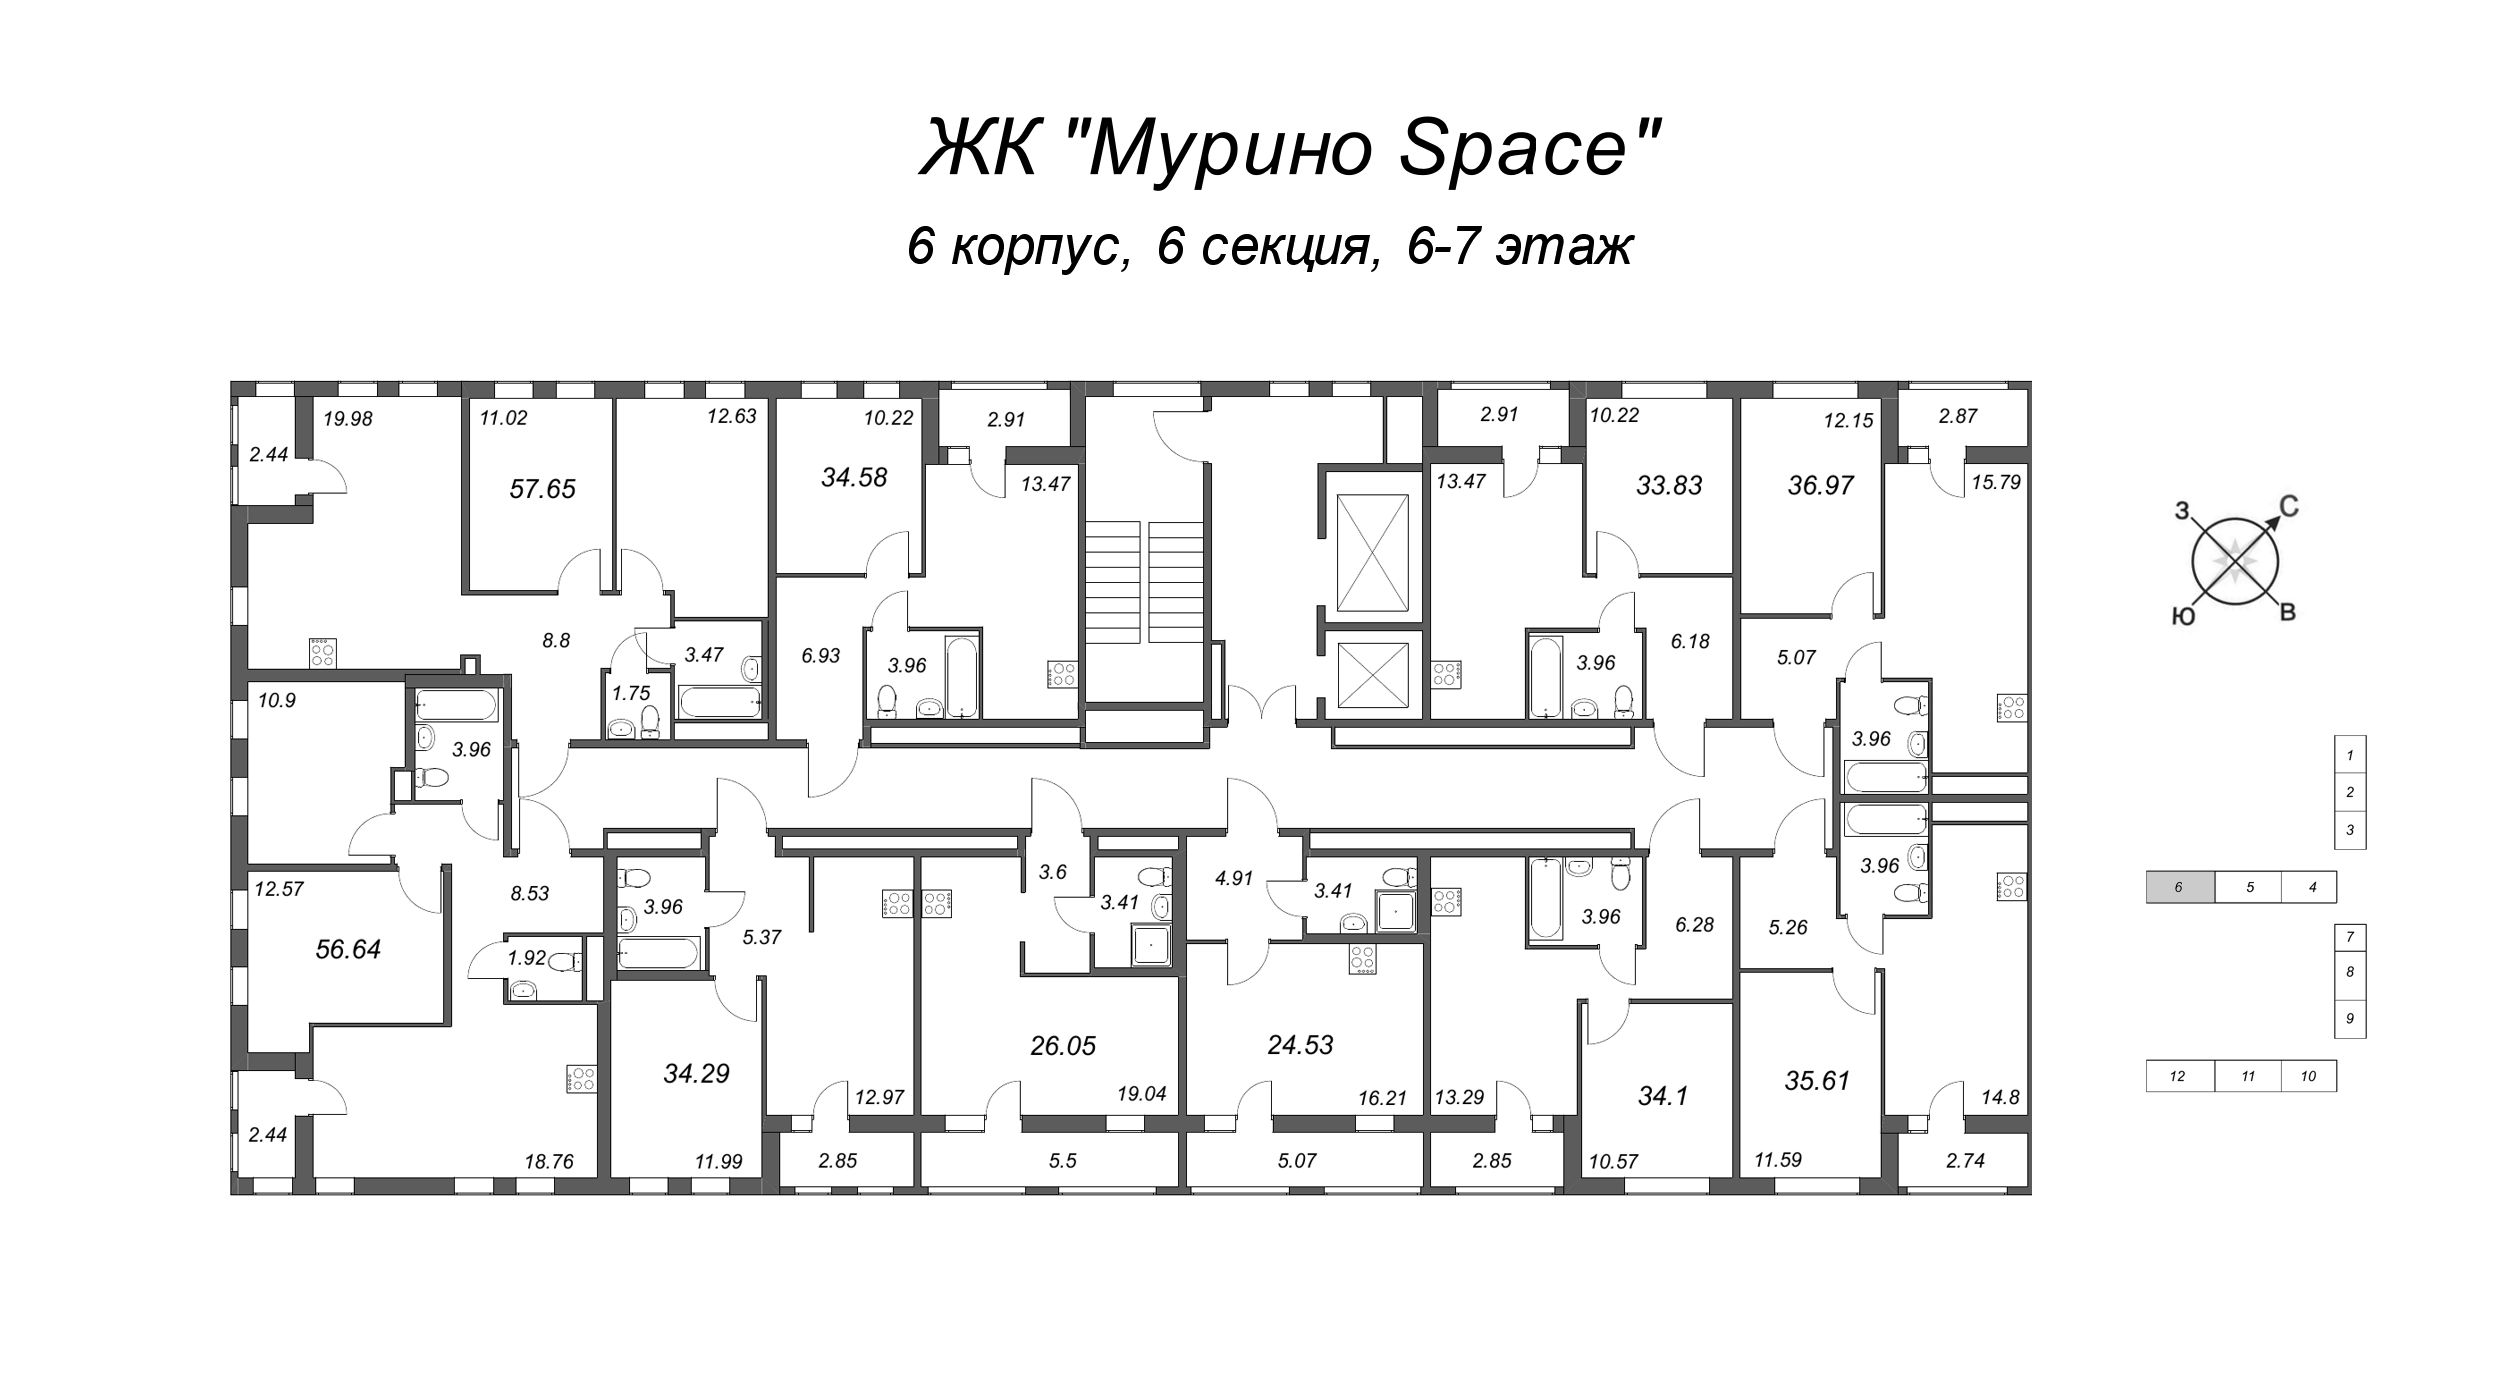 2-комнатная (Евро) квартира, 34.58 м² в ЖК "Мурино Space" - планировка этажа